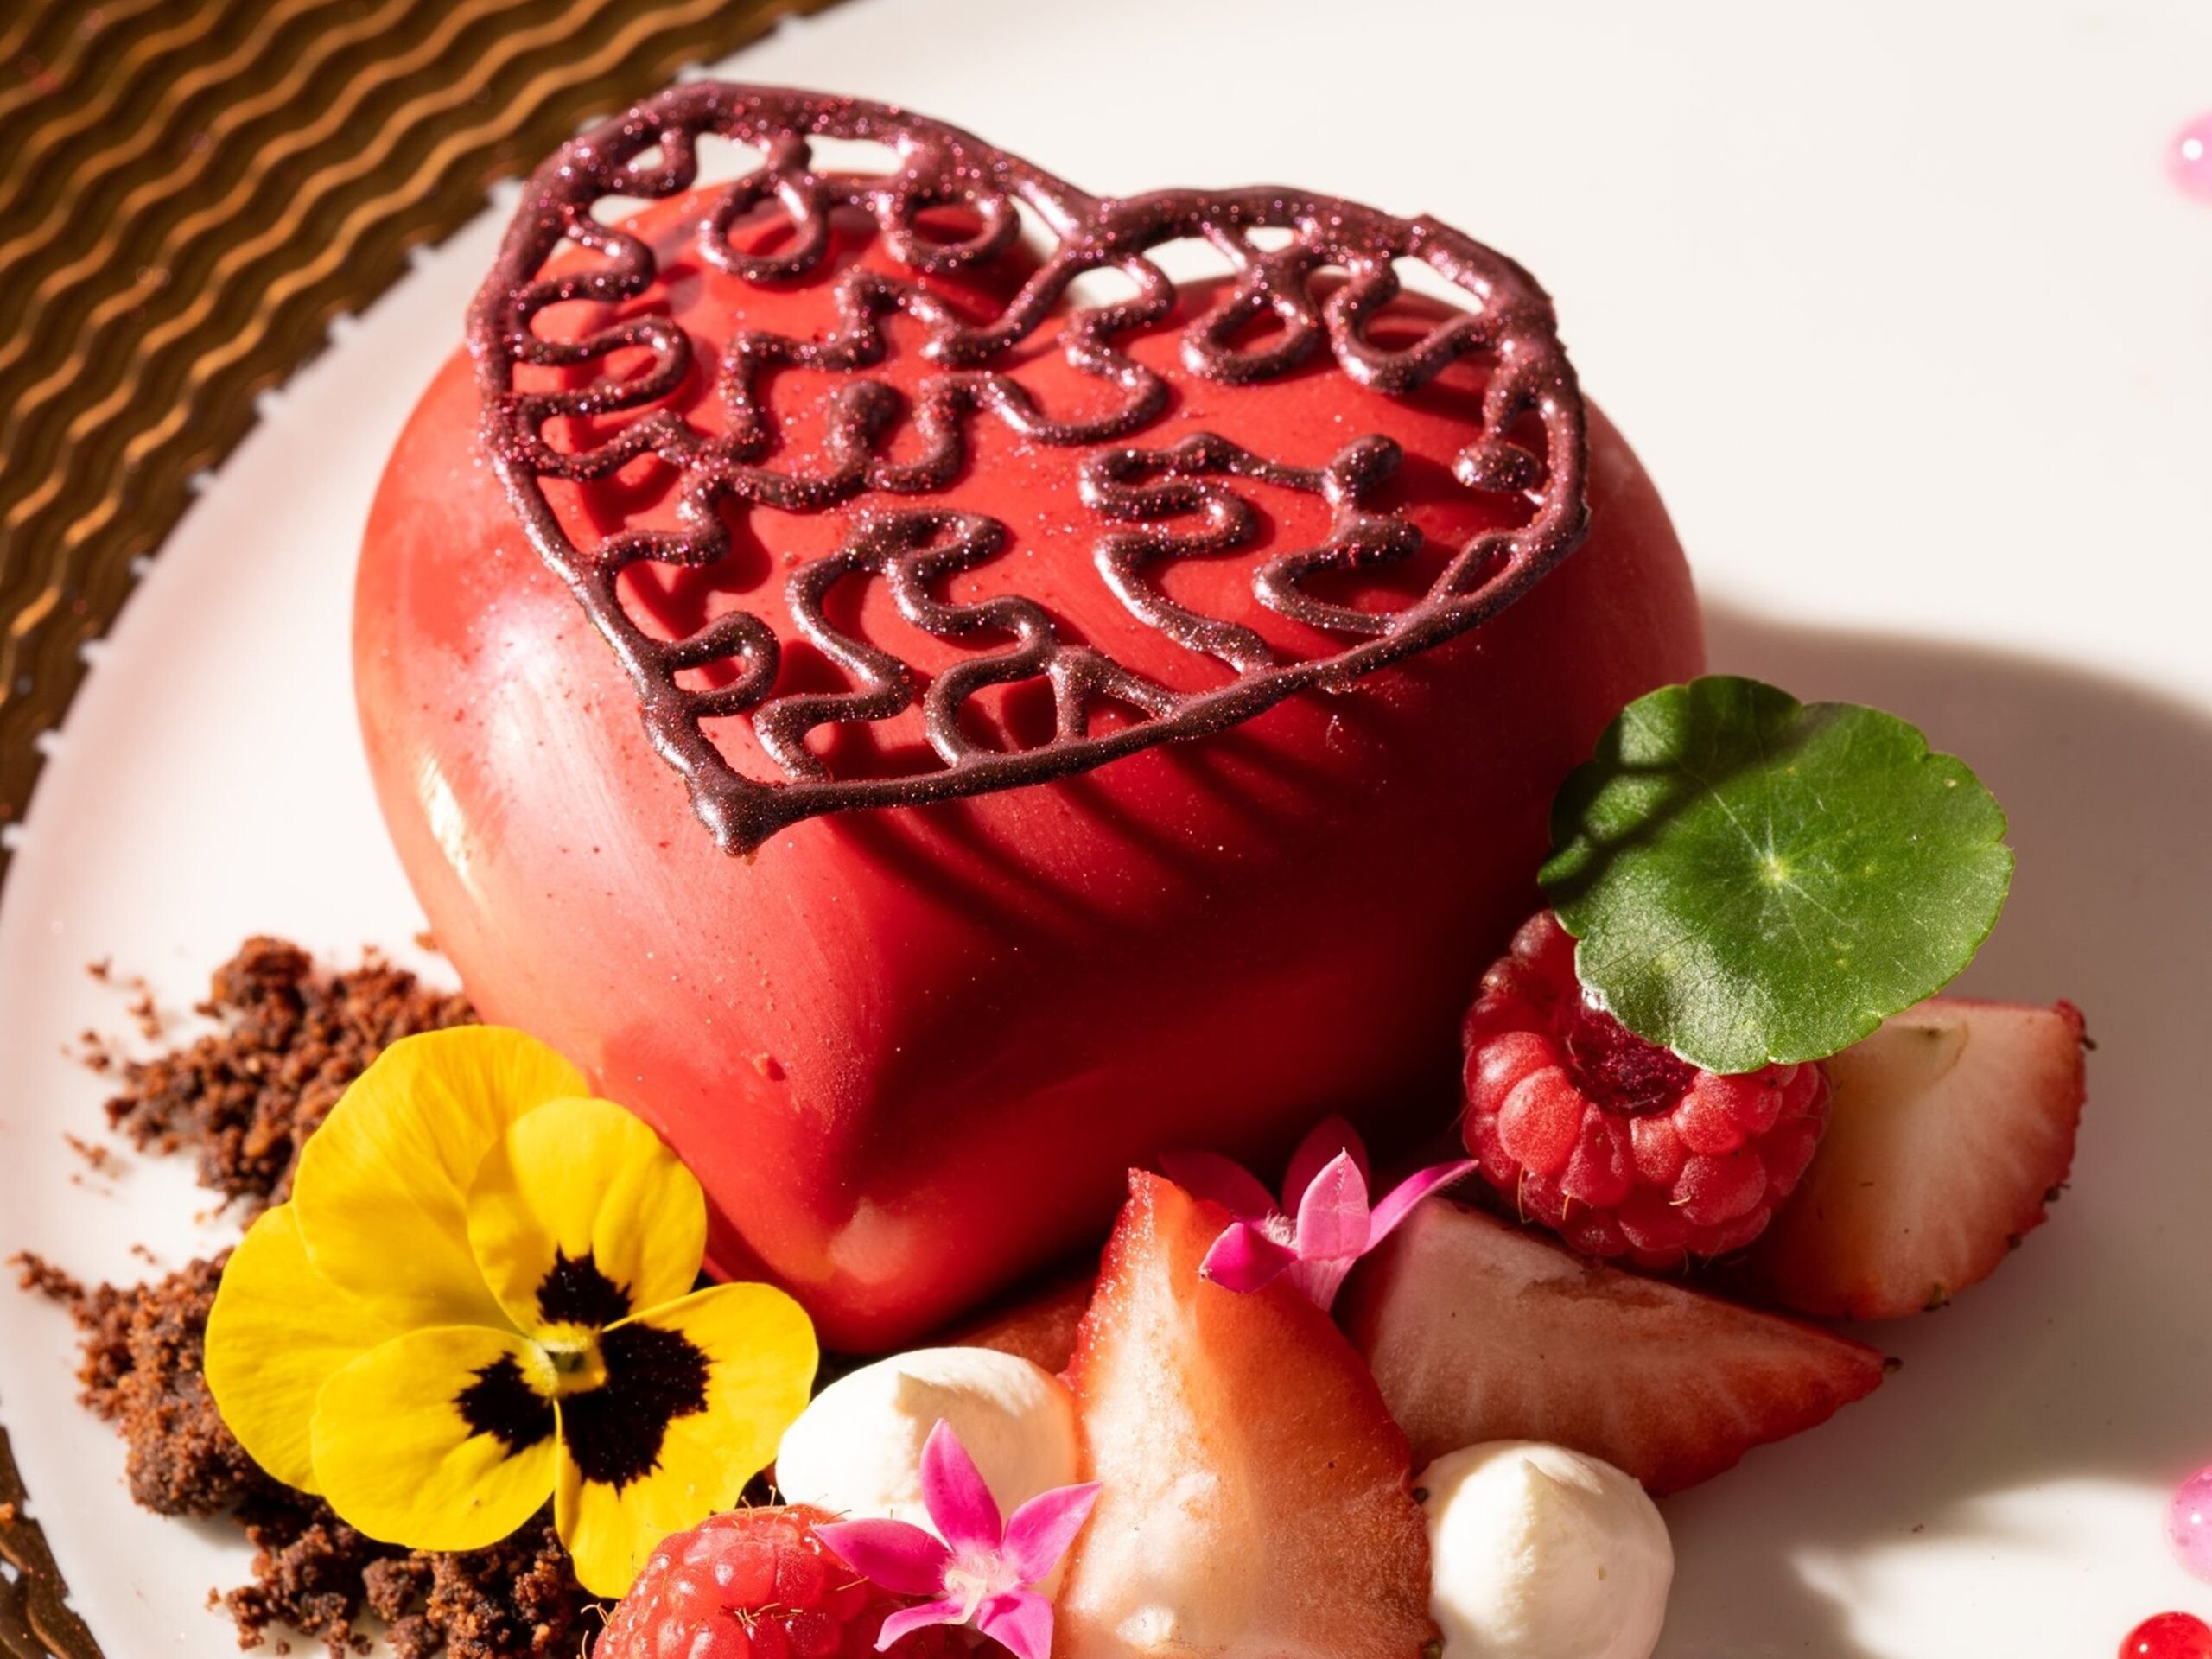 Elegant Dining from the Heart: Signature Restaurants at Anantara Siam Bangkok Mark Valentine's Day with Indulgent experiences